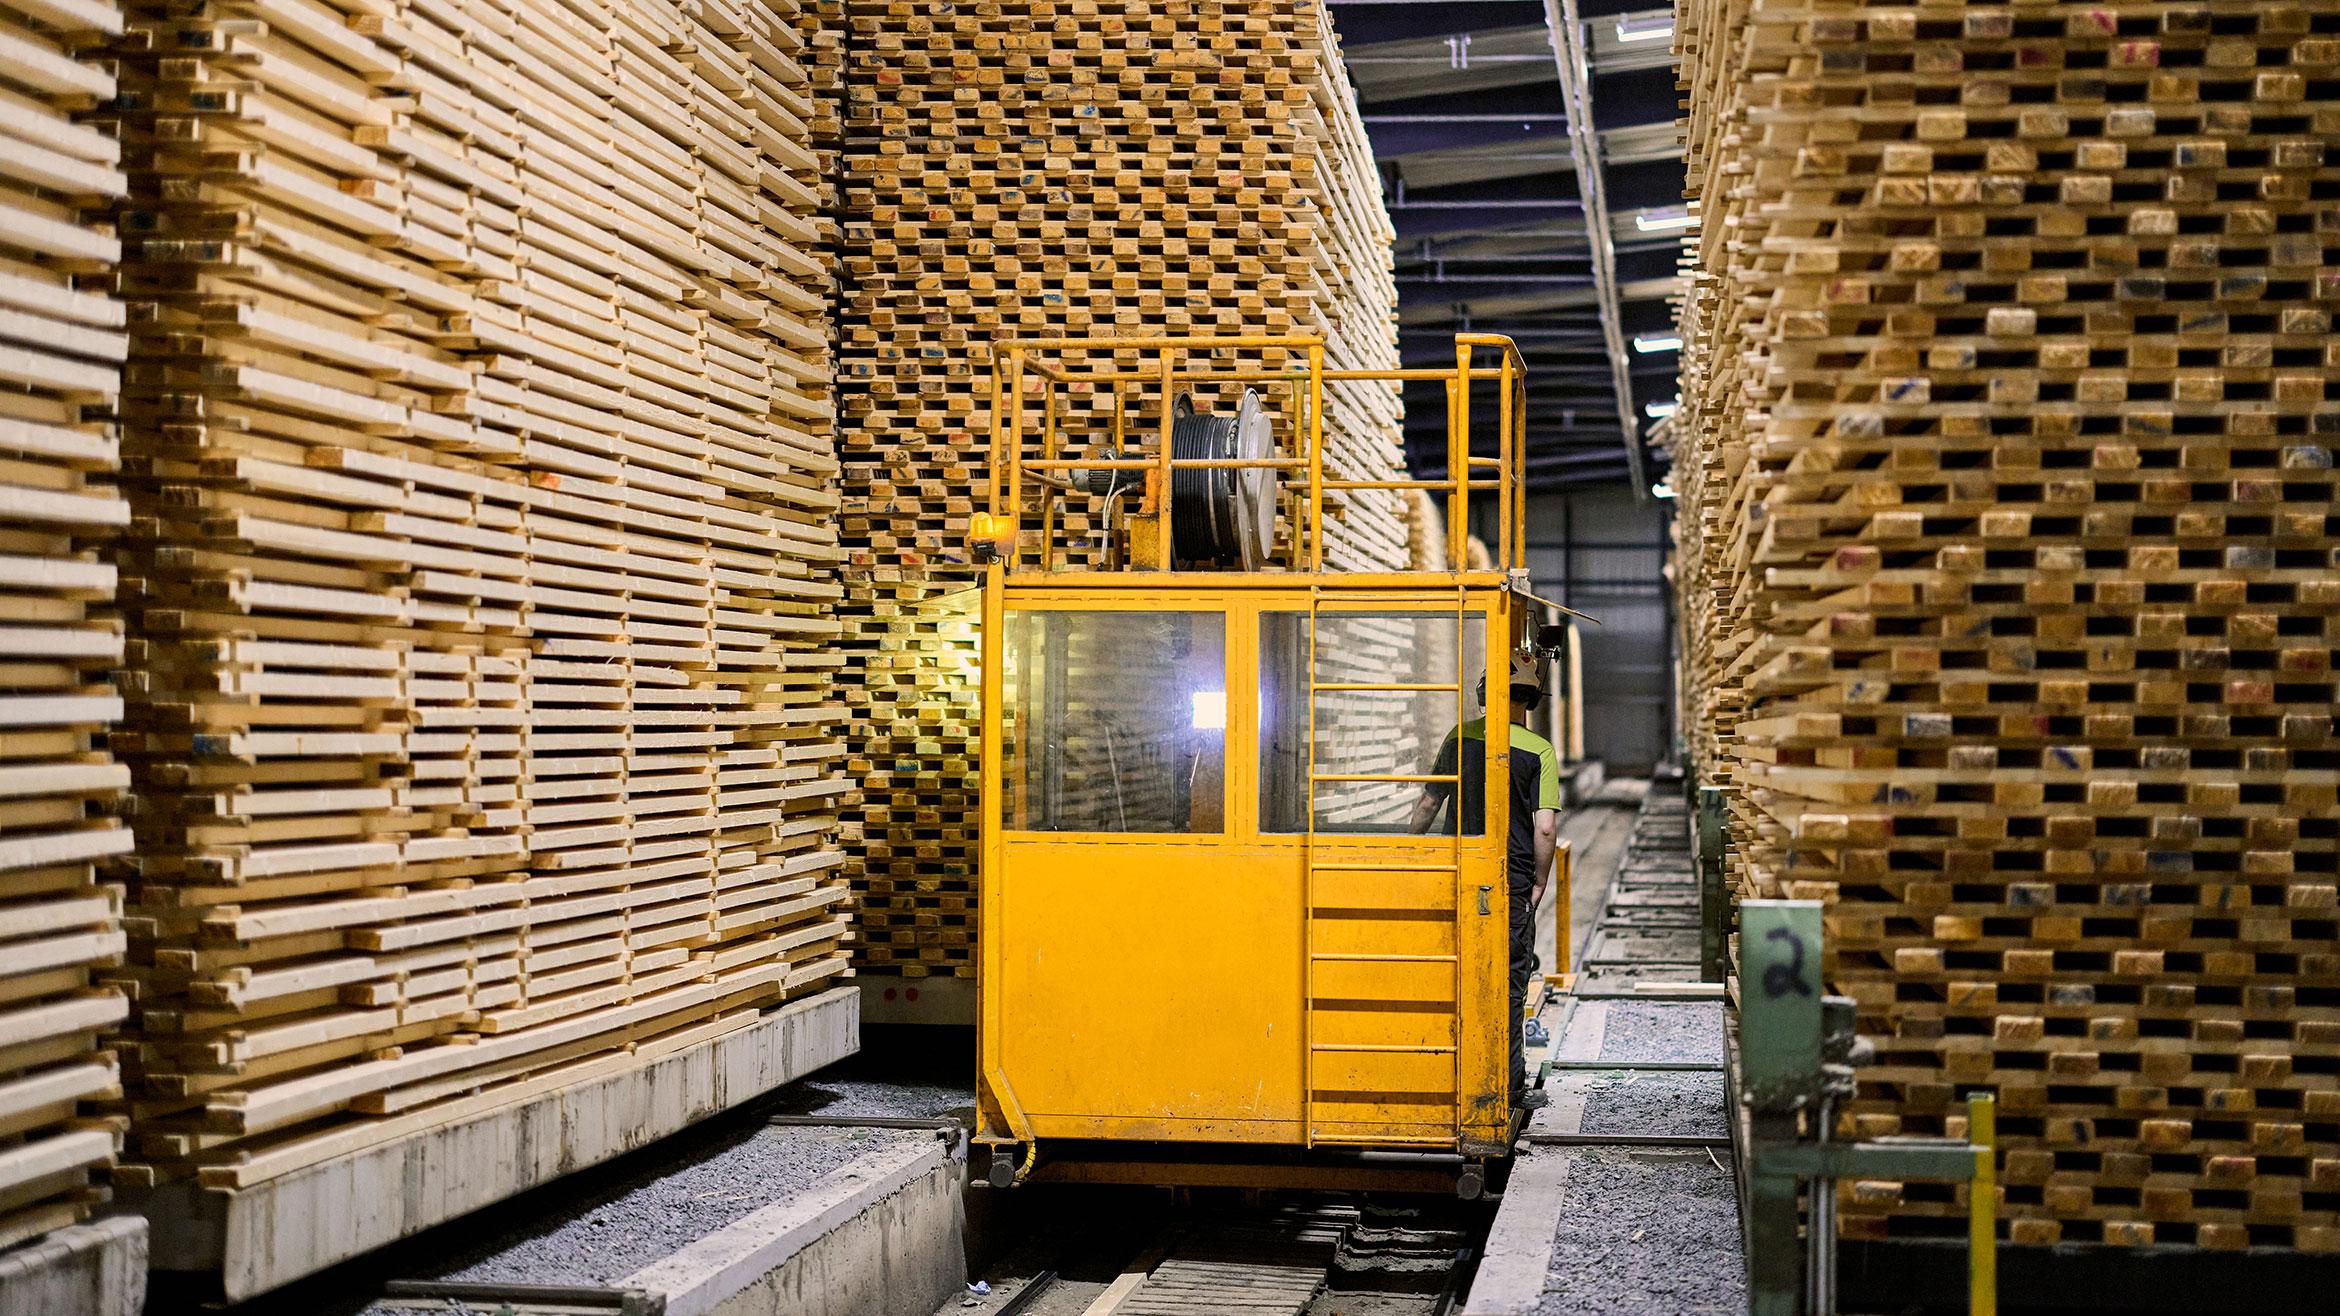 Vilppula sawmill drying stacks